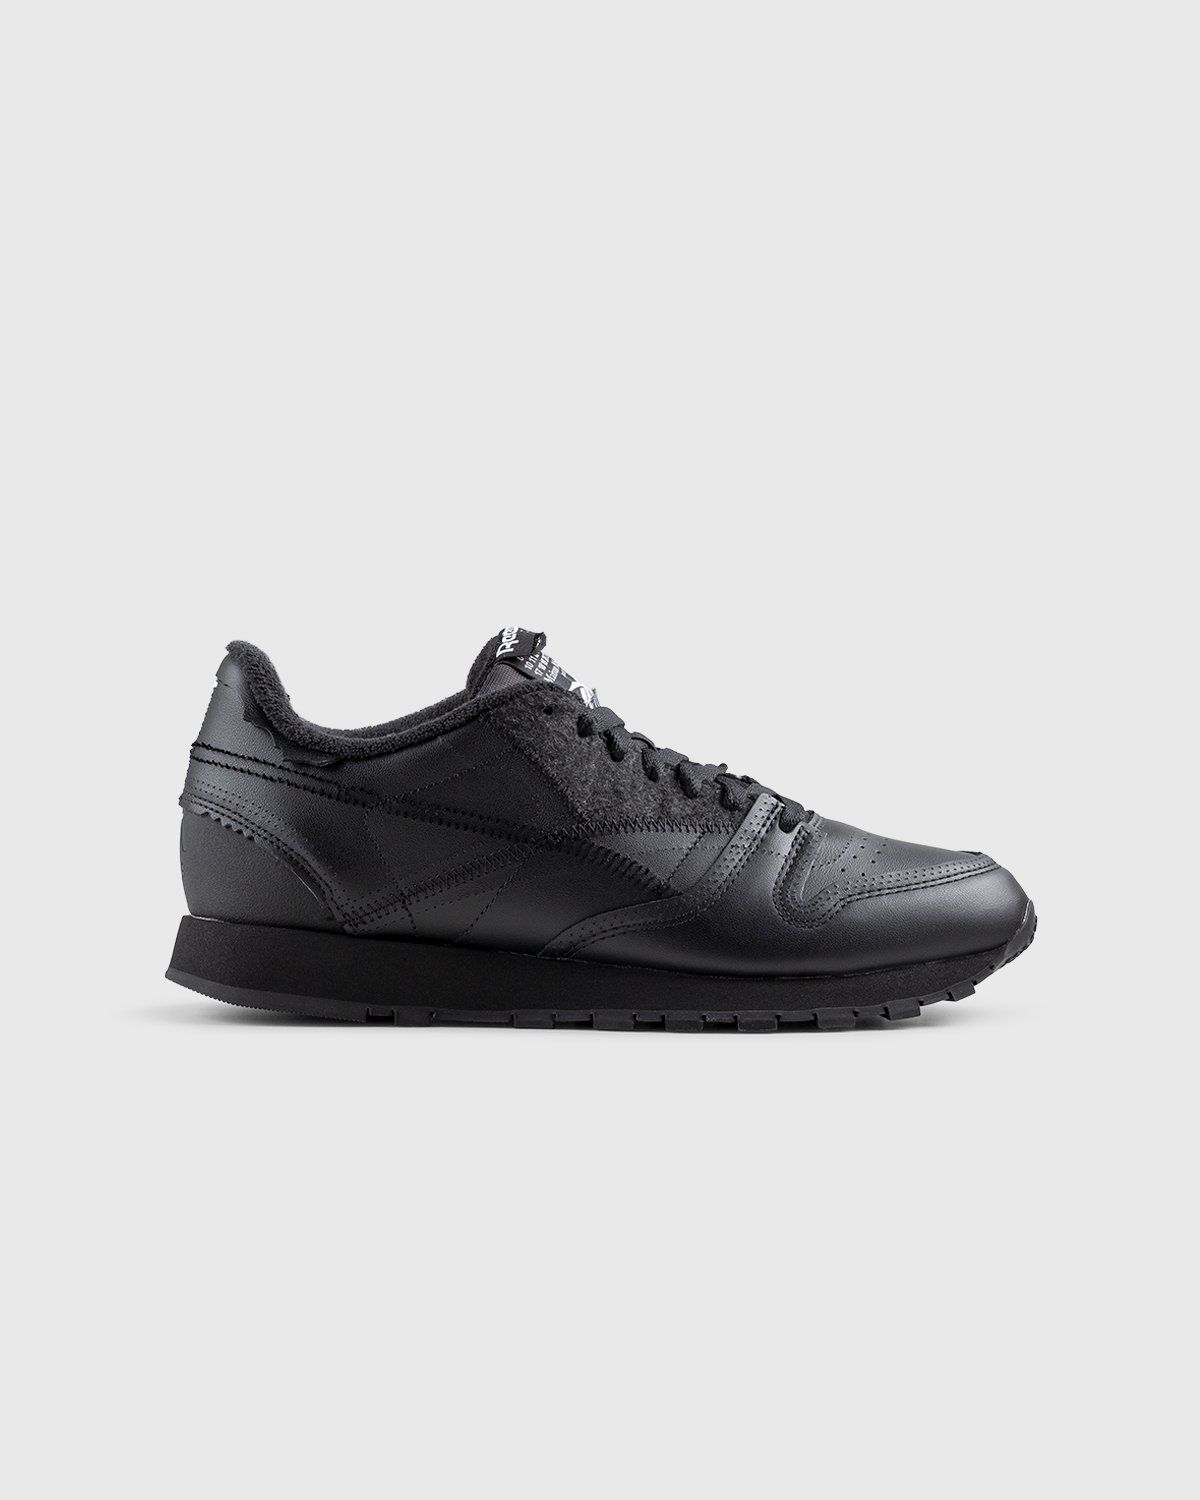 Maison Margiela x Reebok – Classic Leather Memory Of Black/Footwear White/Black - Sneakers - Black - Image 1